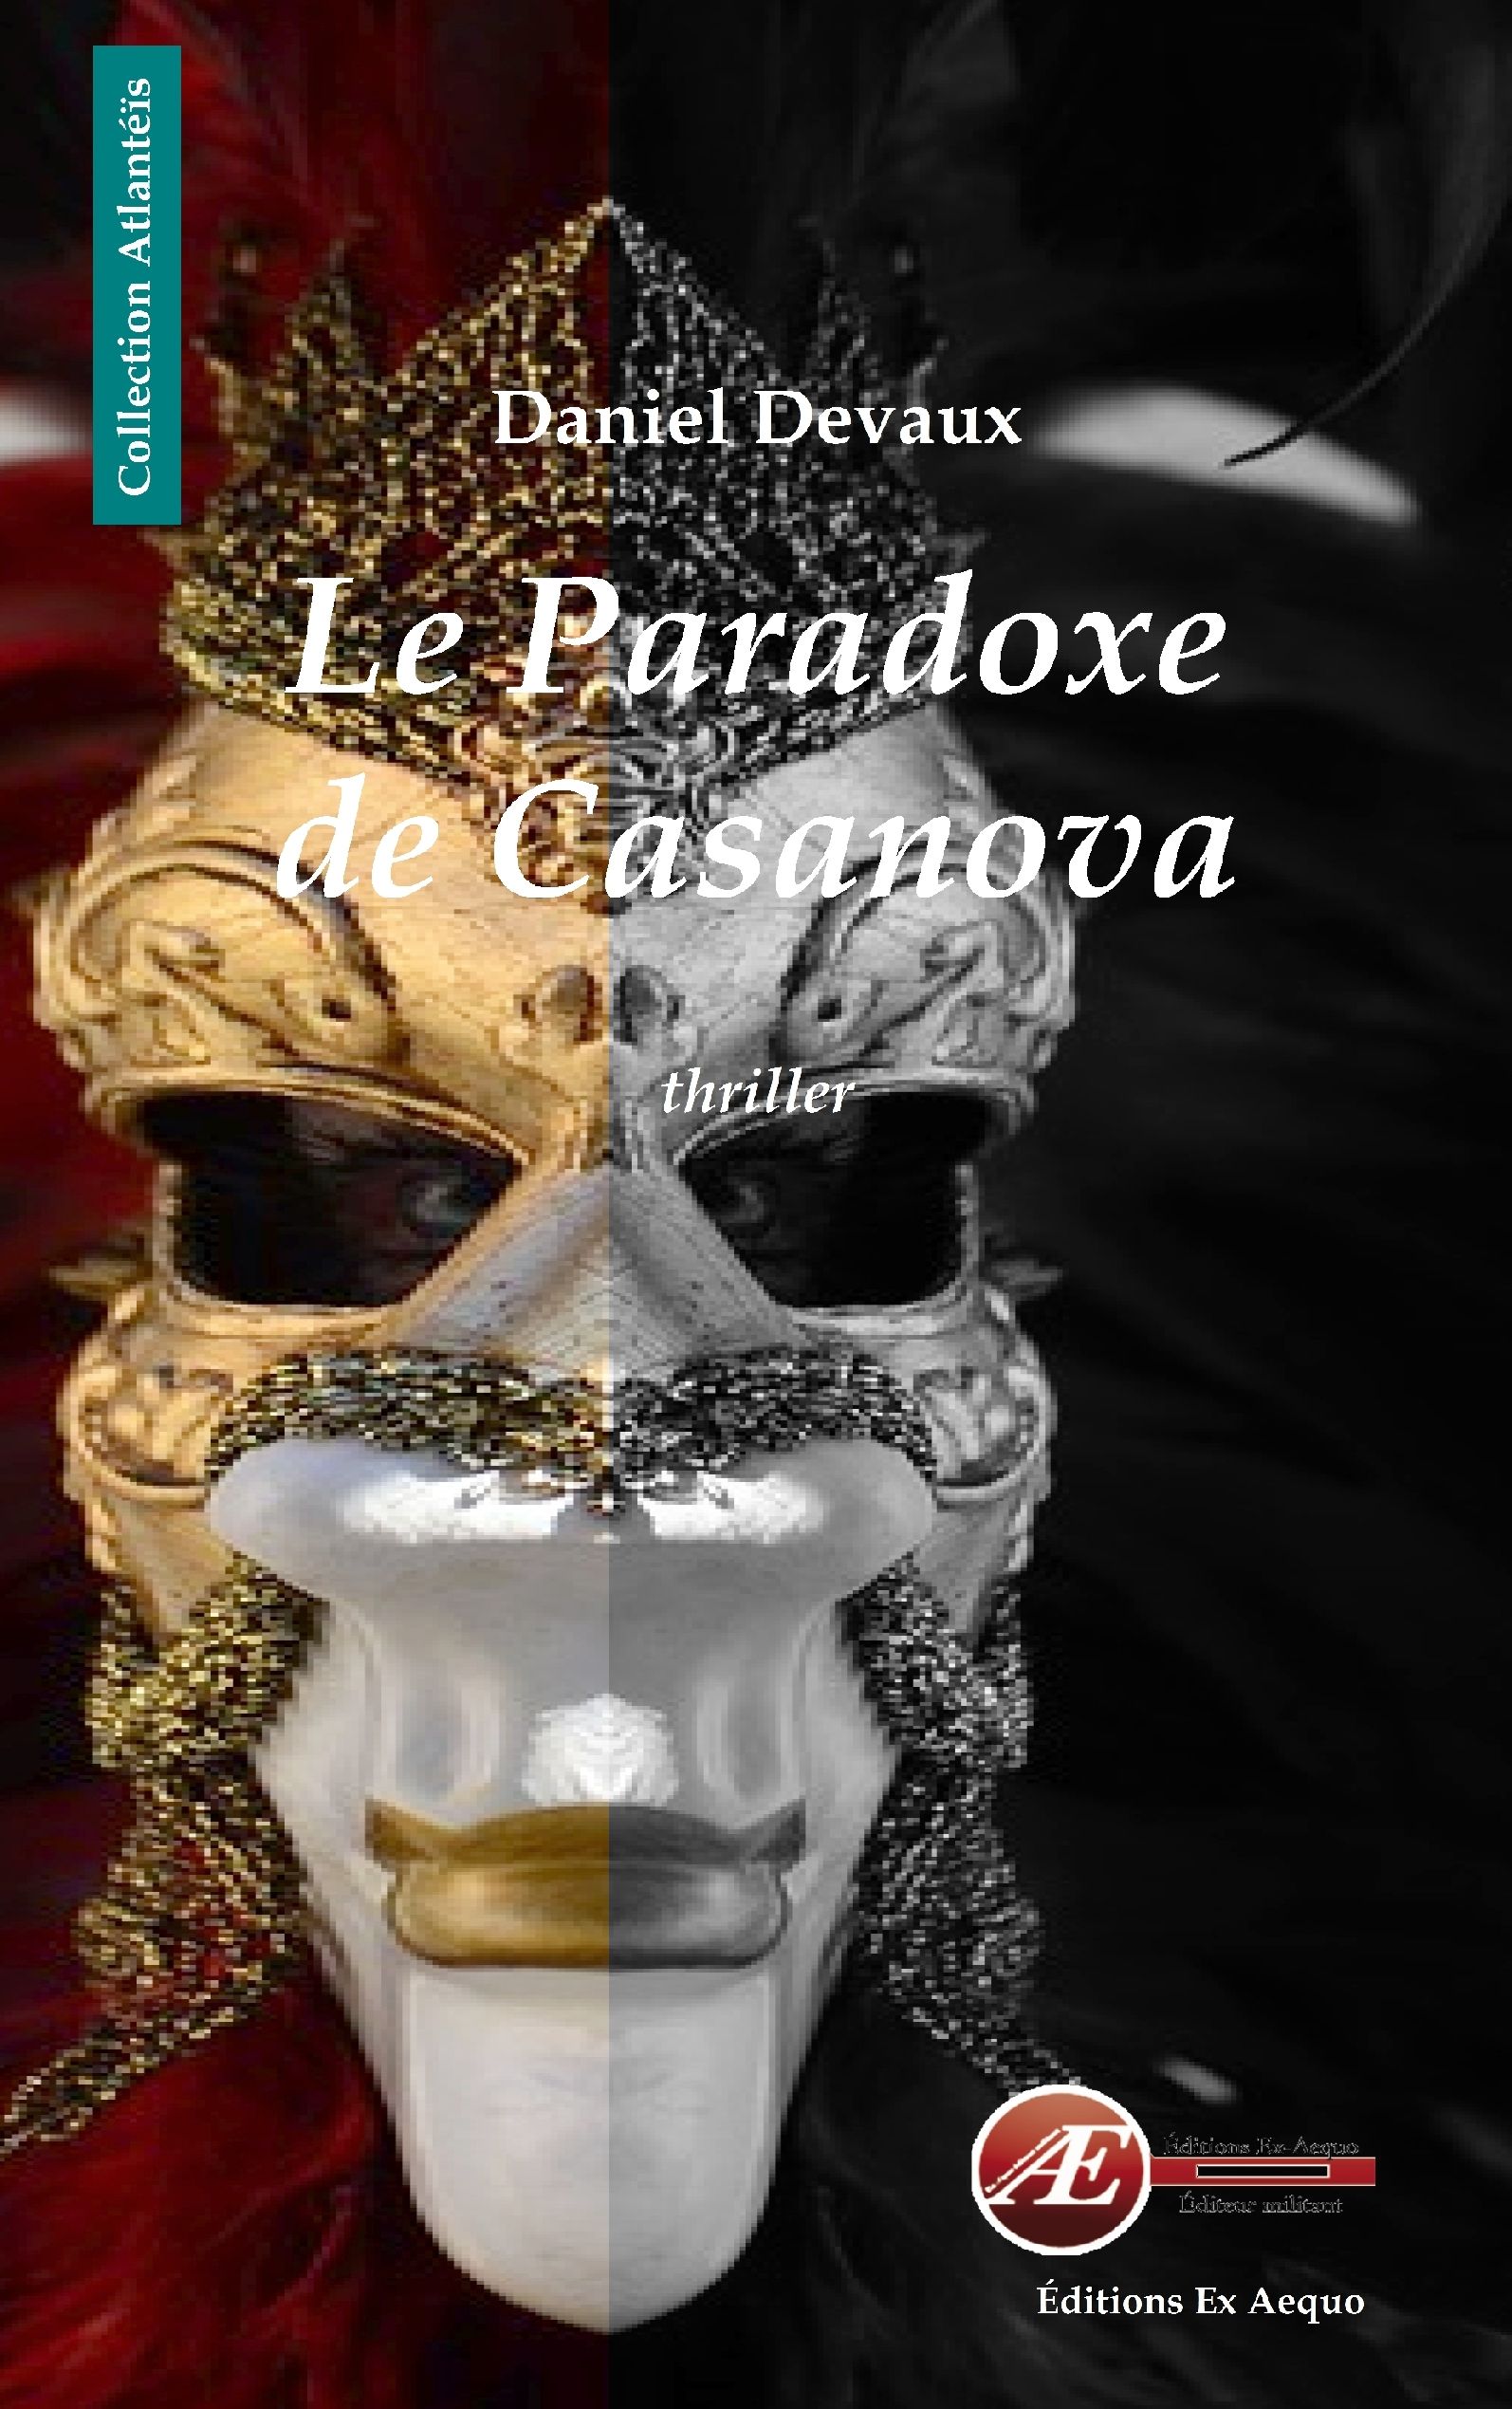 You are currently viewing Le paradoxe de Casanova, de Daniel Devaux